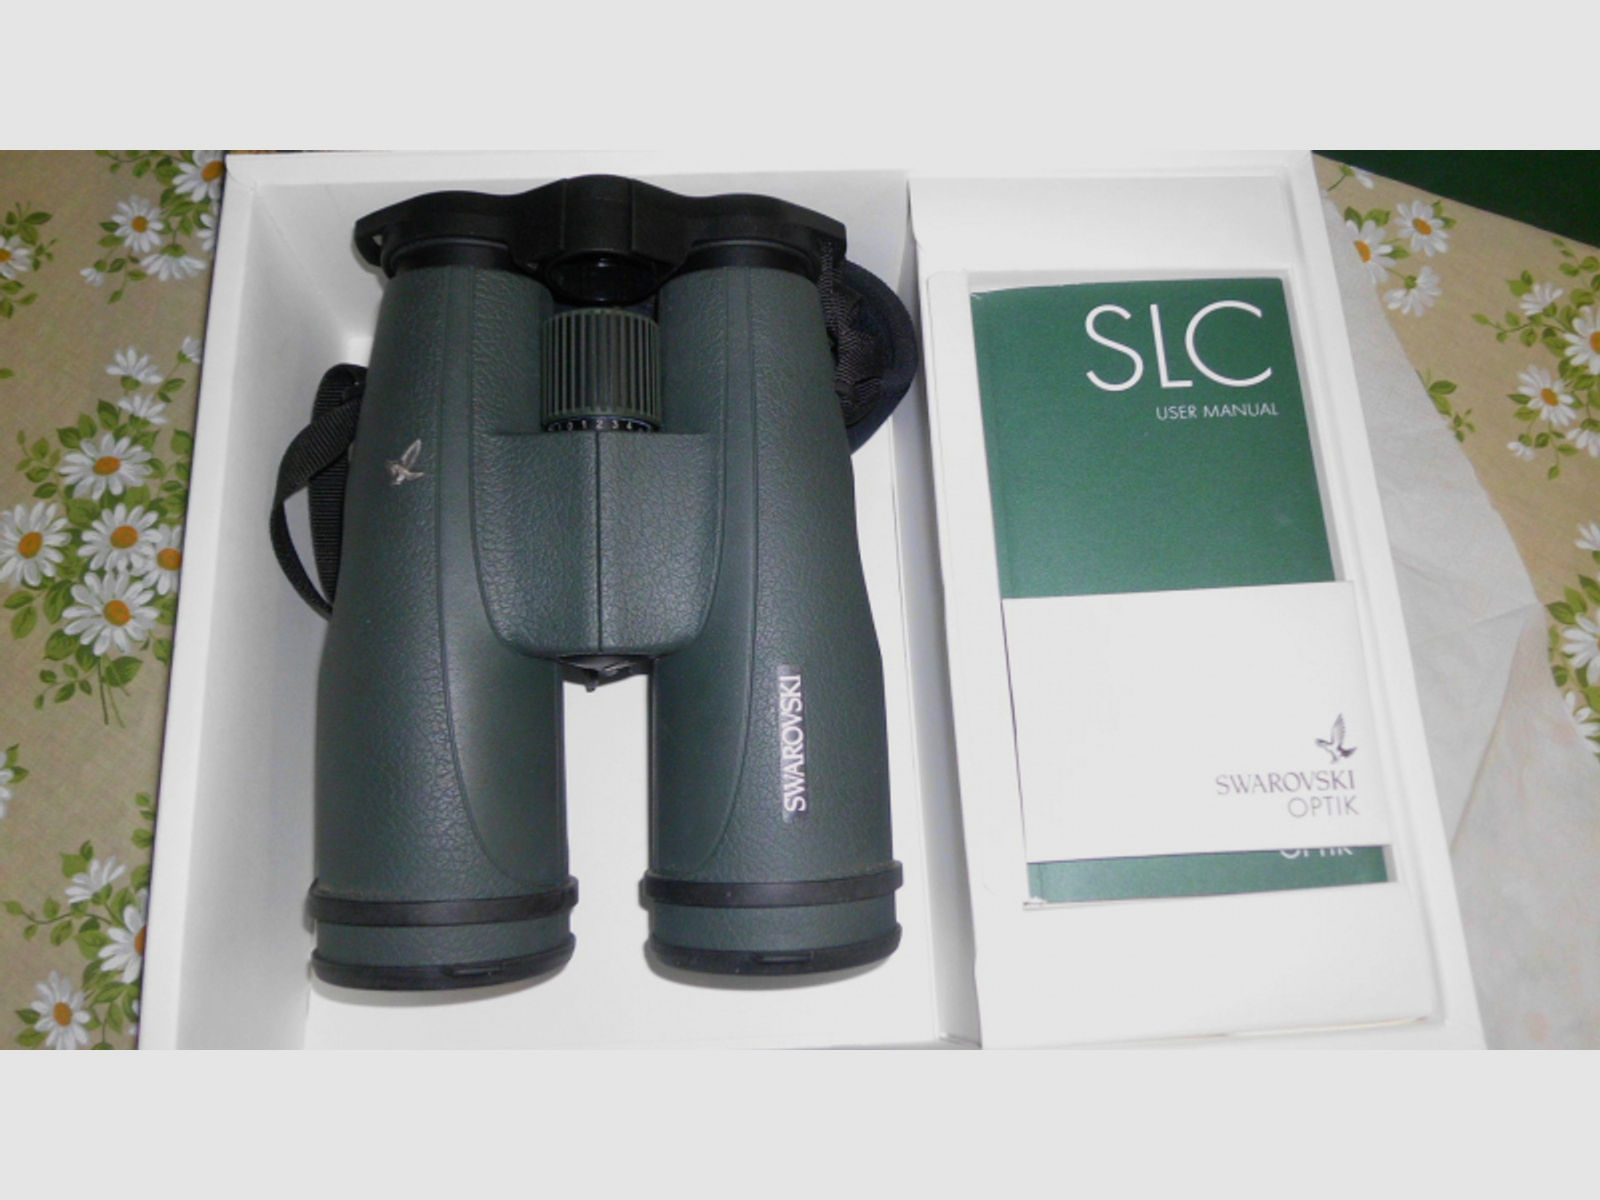 Neuwertiges Swarovski Fernglas SLC 8x56